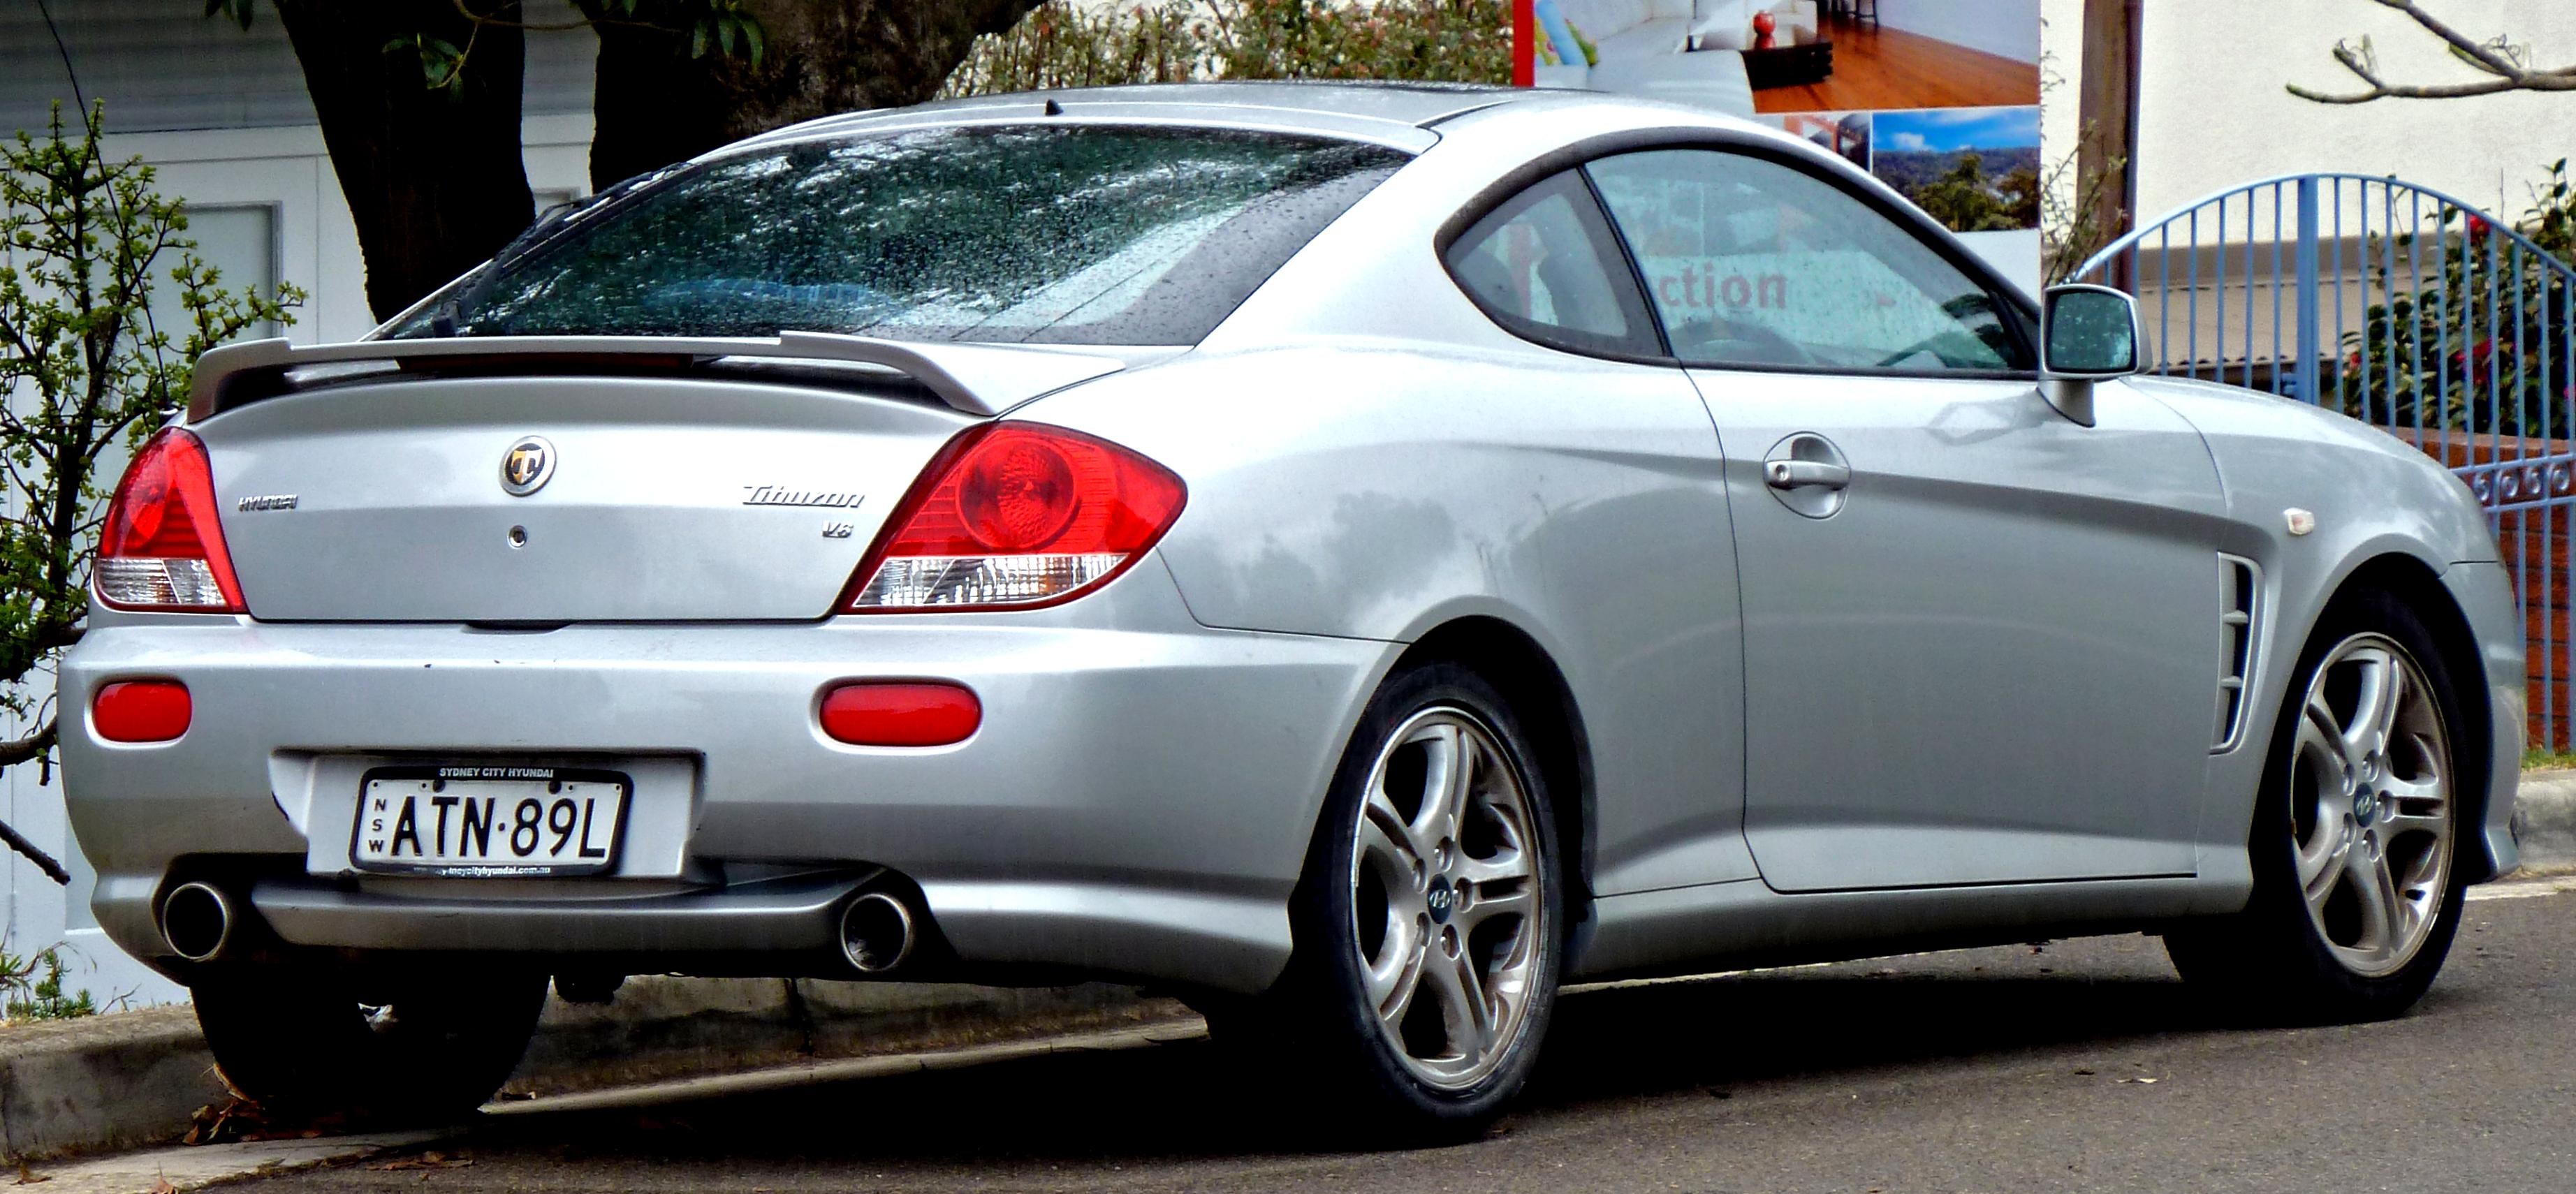 Hyundai Coupe / Tiburon 2007 #38